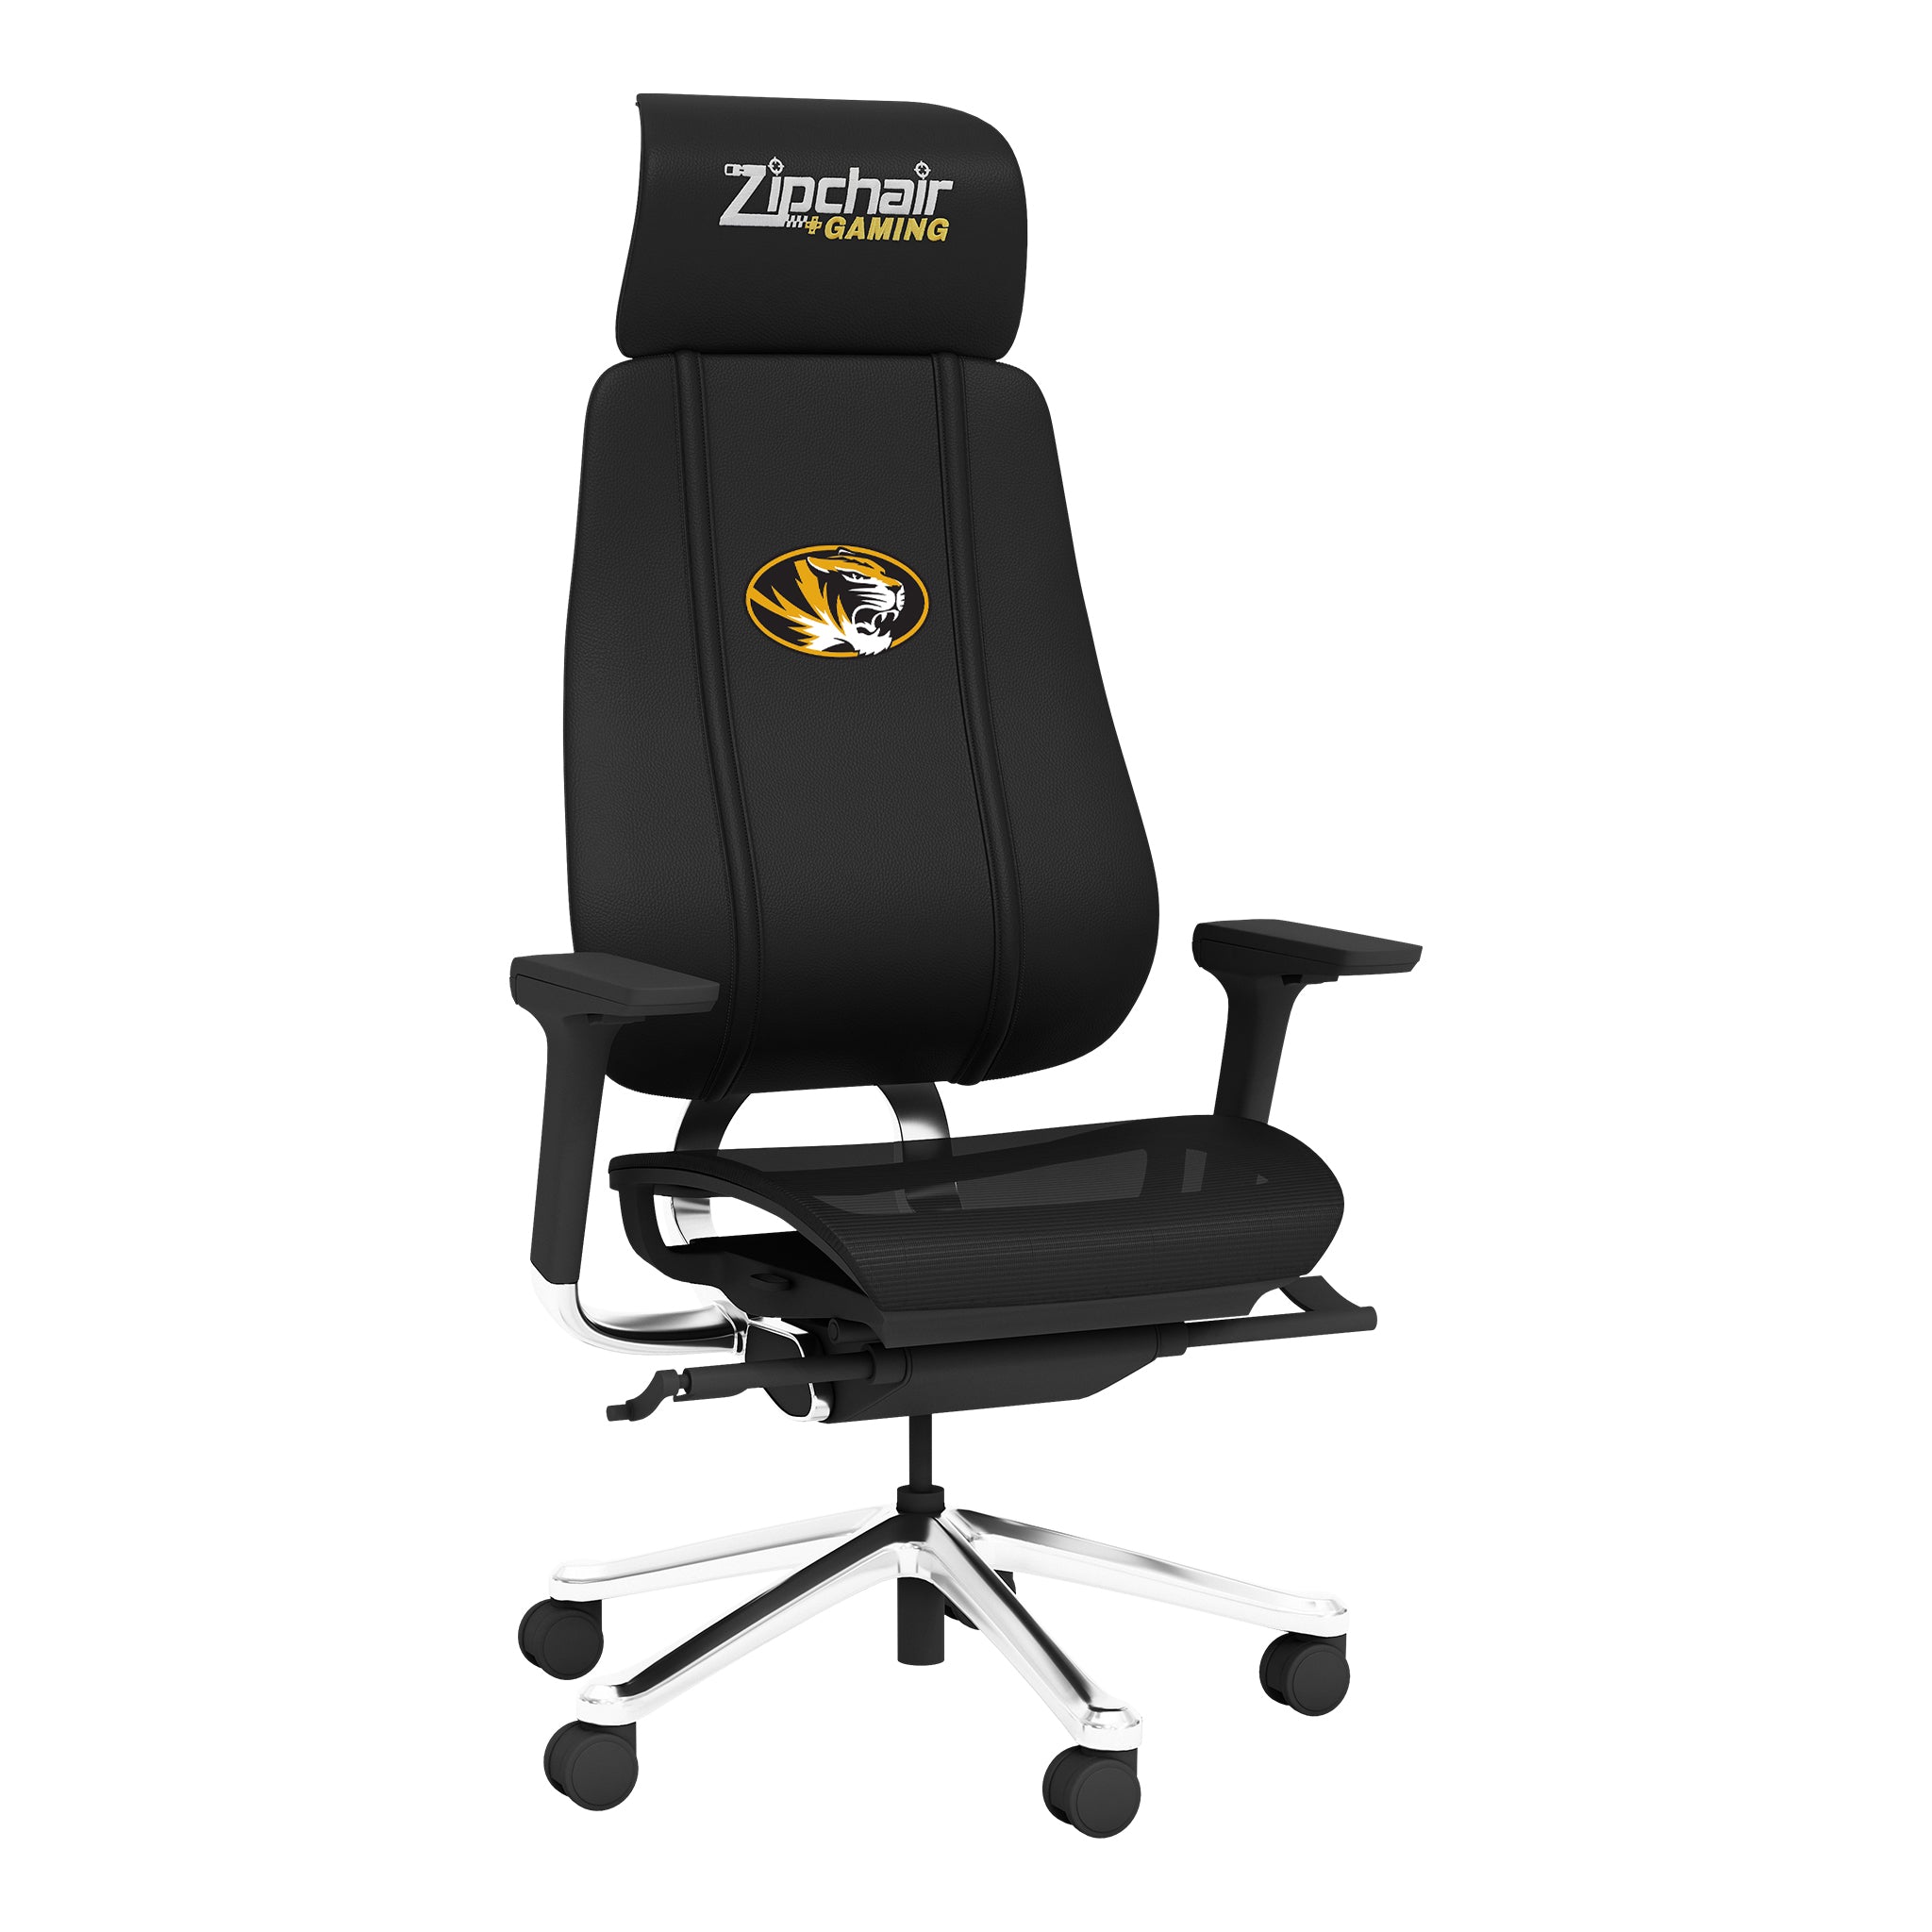 Missouri Tigers PhantomX Gaming Chair with Missouri Tigers Logo